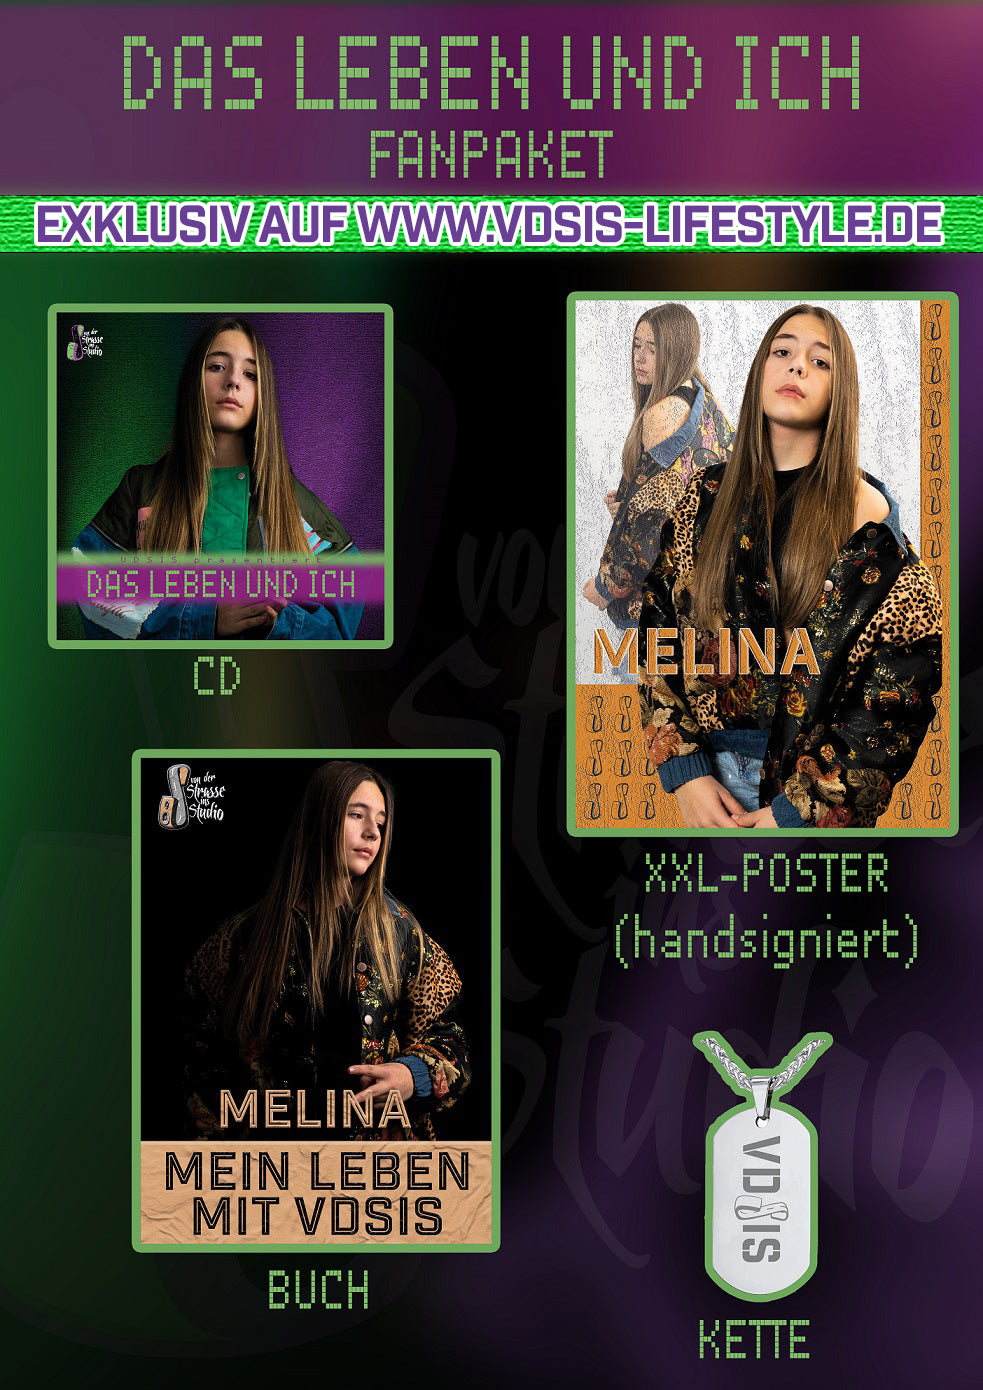 Melina Fanpaket - Das Leben &  ich - VDSIS